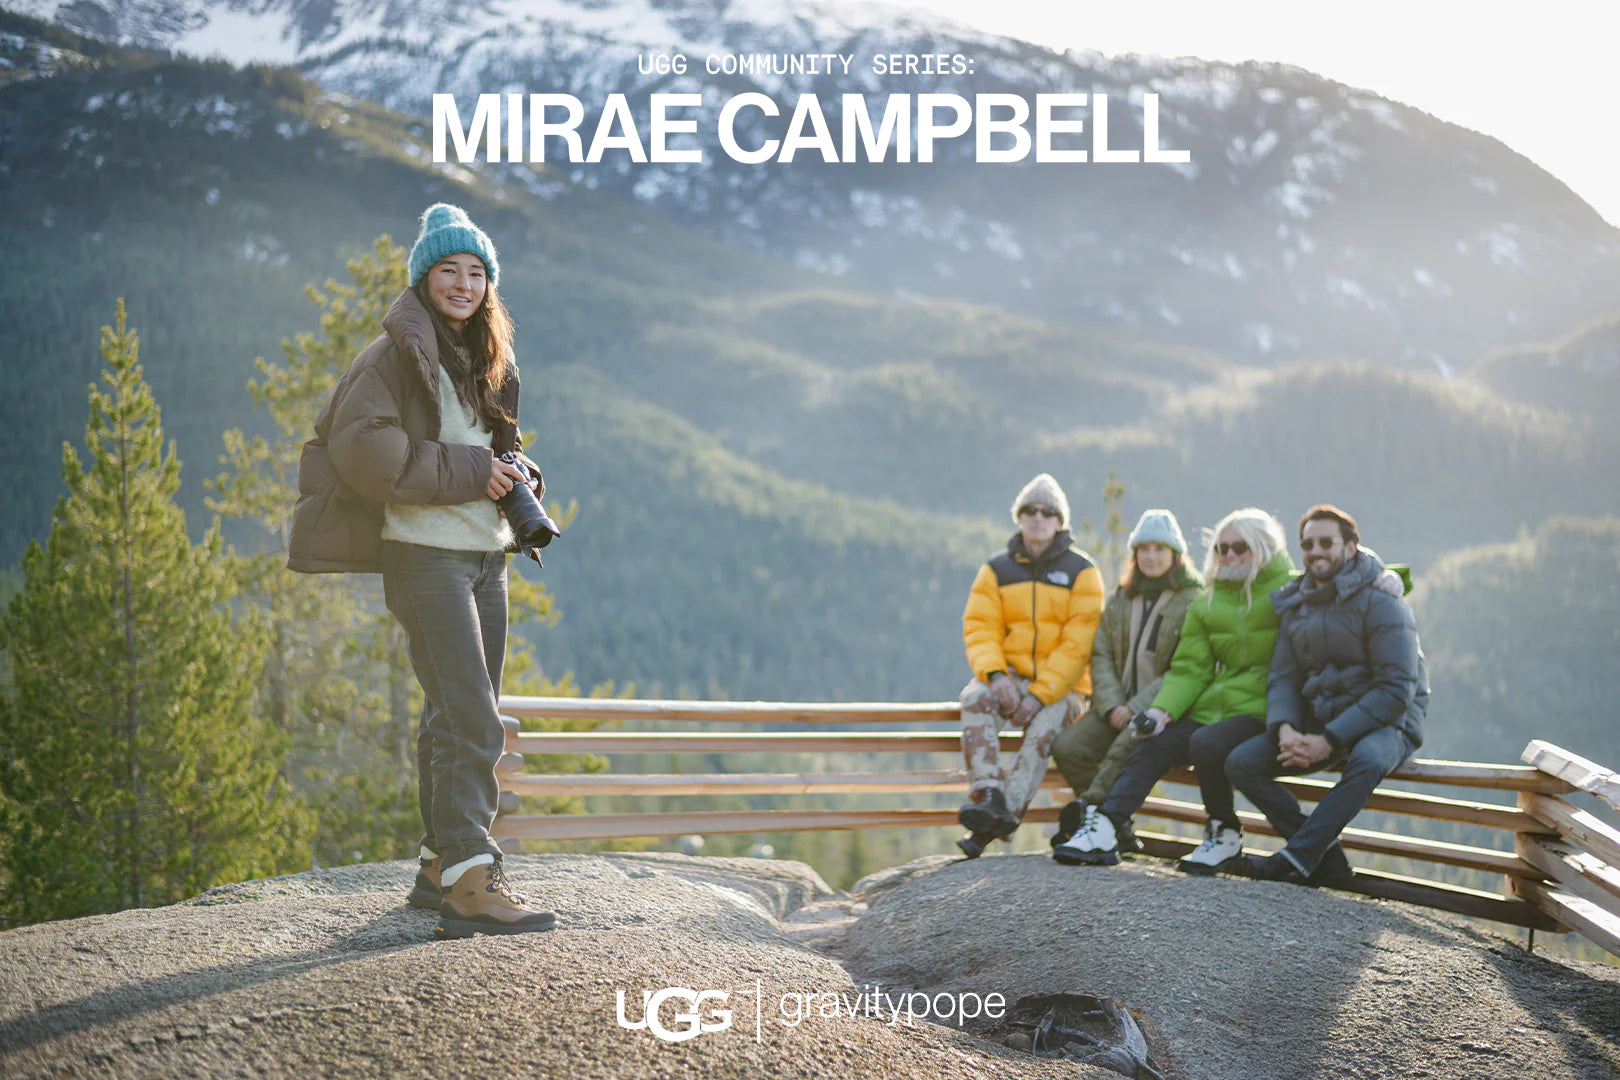 Ugg Community Series | Mirae Campbell